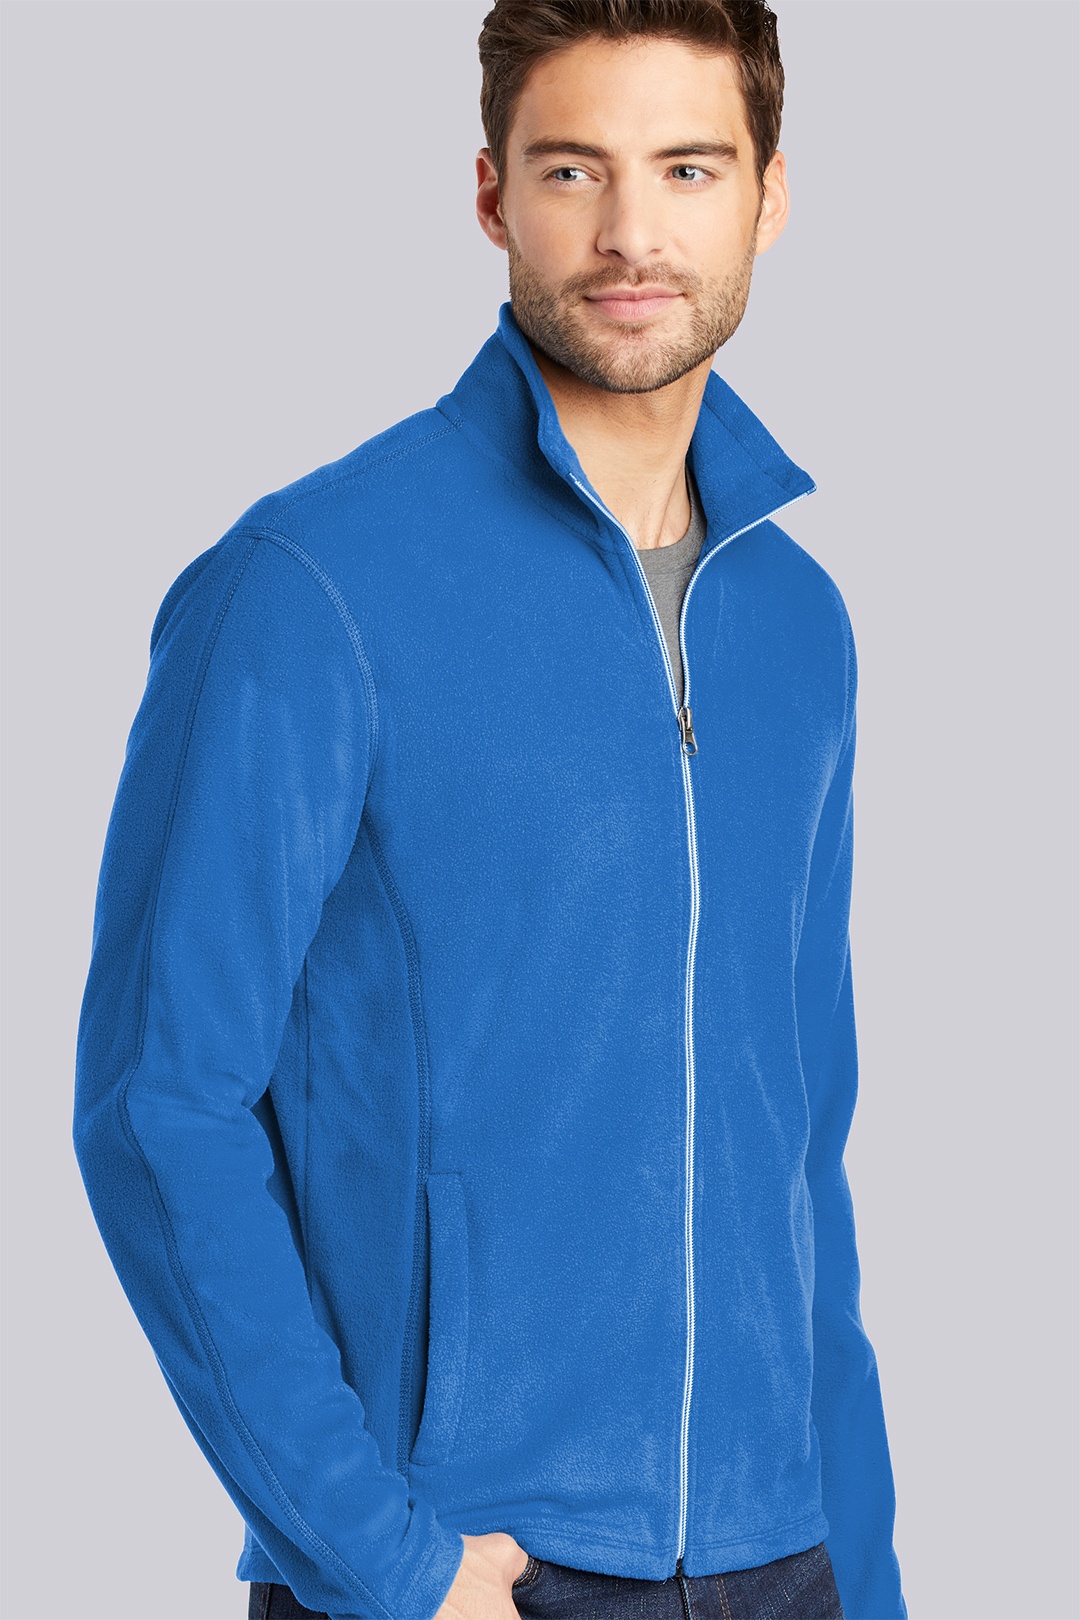 https://www.liquidyachtwear.com/wp-content/uploads/2020/11/liquid-yacht-wear-mens-microfleece-full-zip-royal-blue.jpg